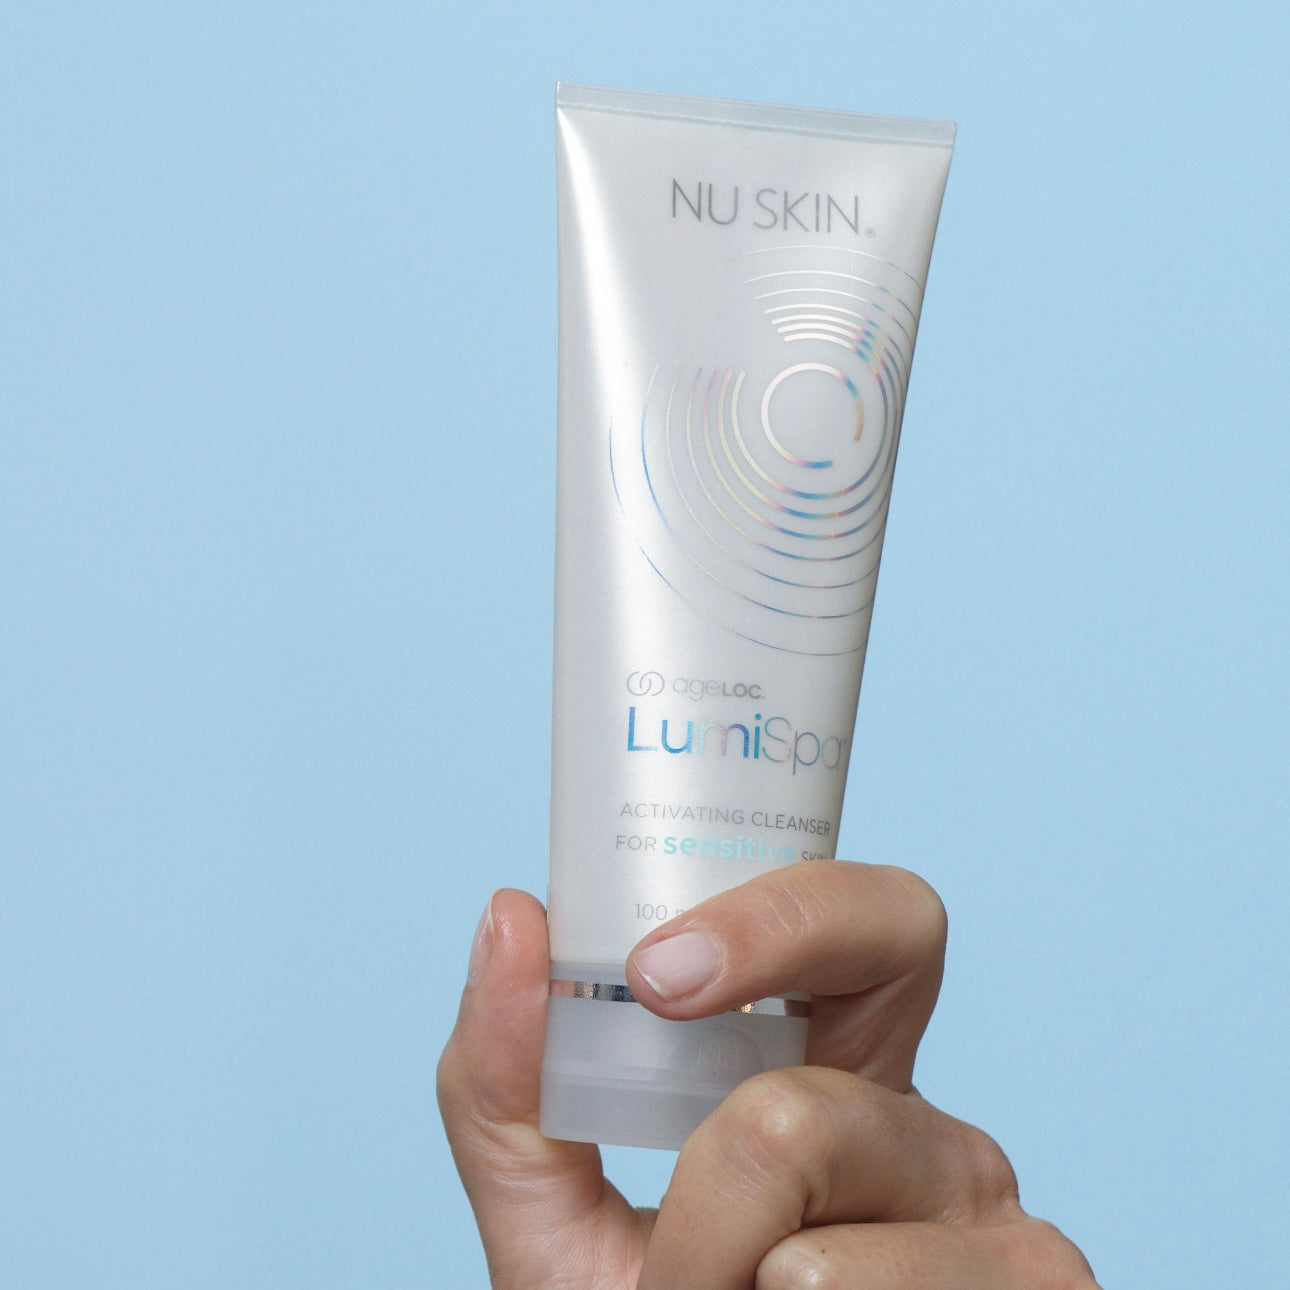 ageLoc Lumispa iO Blue + Cleanser | Nu Skin Bundle | NuSkin